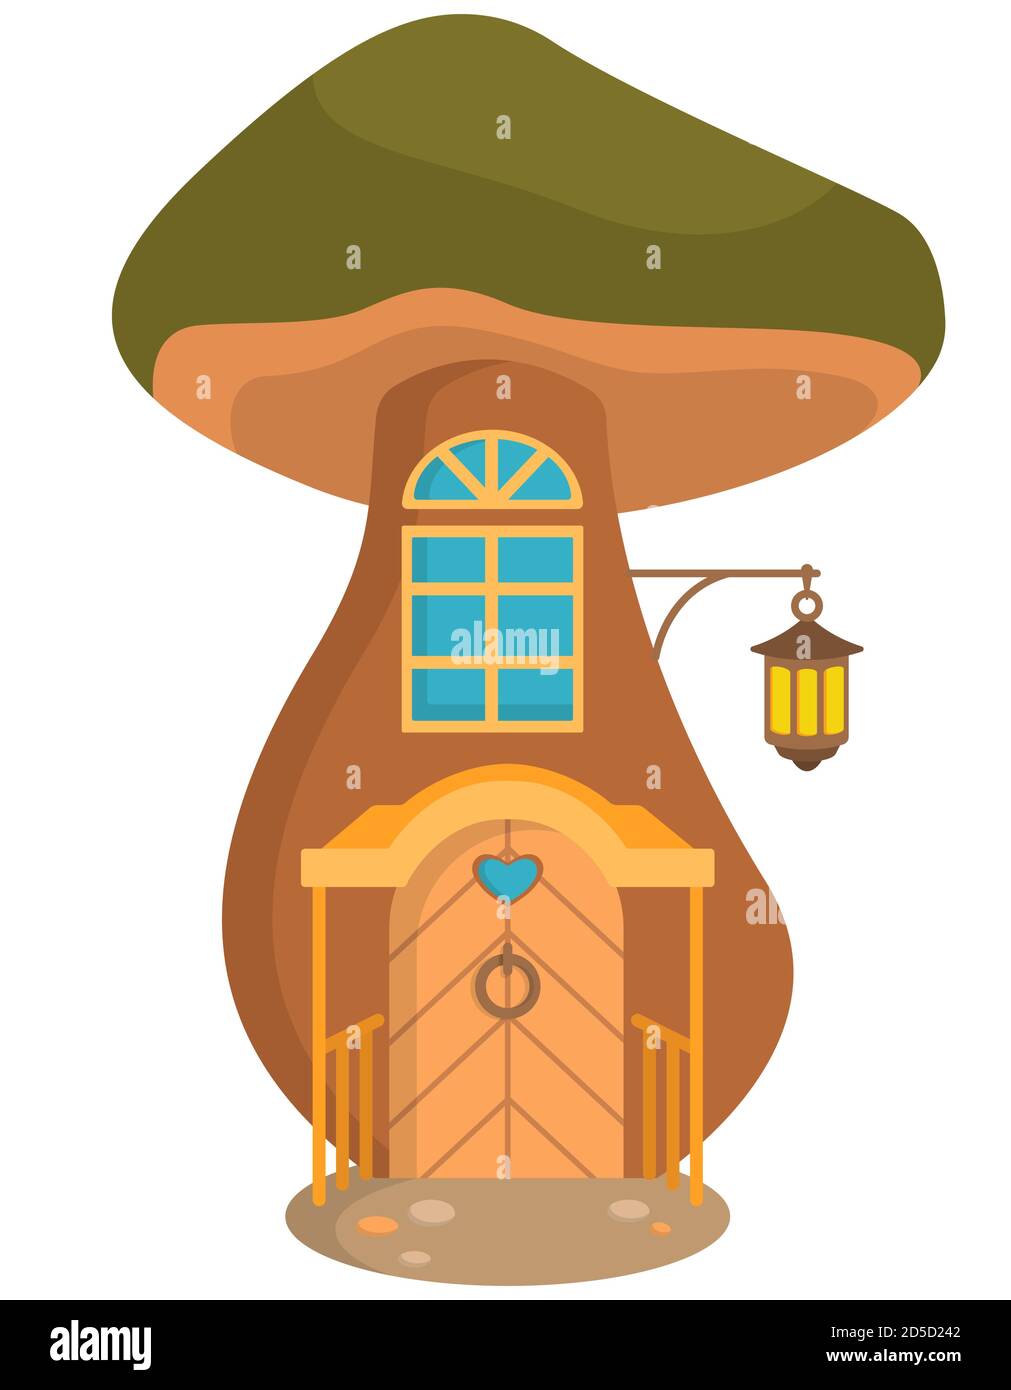 Mushroom house with porch. Fairytale building exterior in cartoon style. Stock Vector